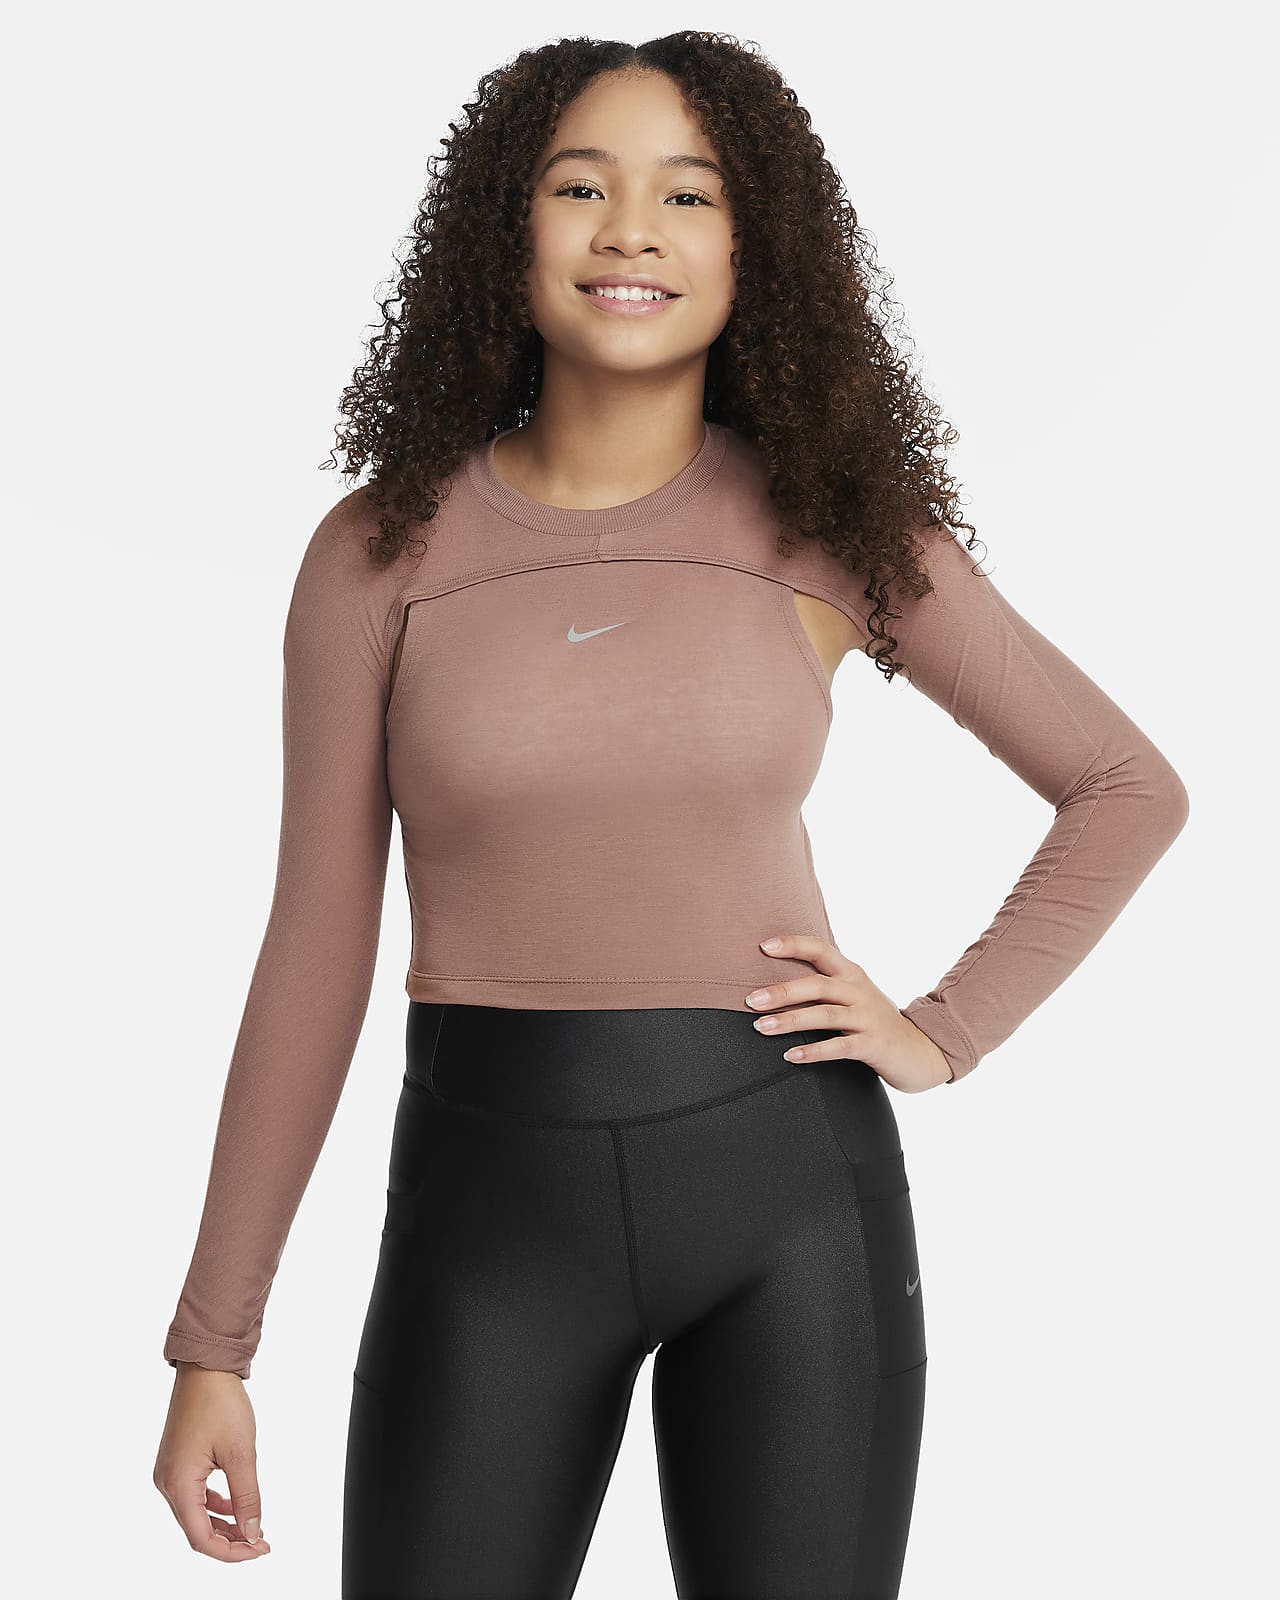 Nike Girls' Dri-FIT Long-Sleeve Top